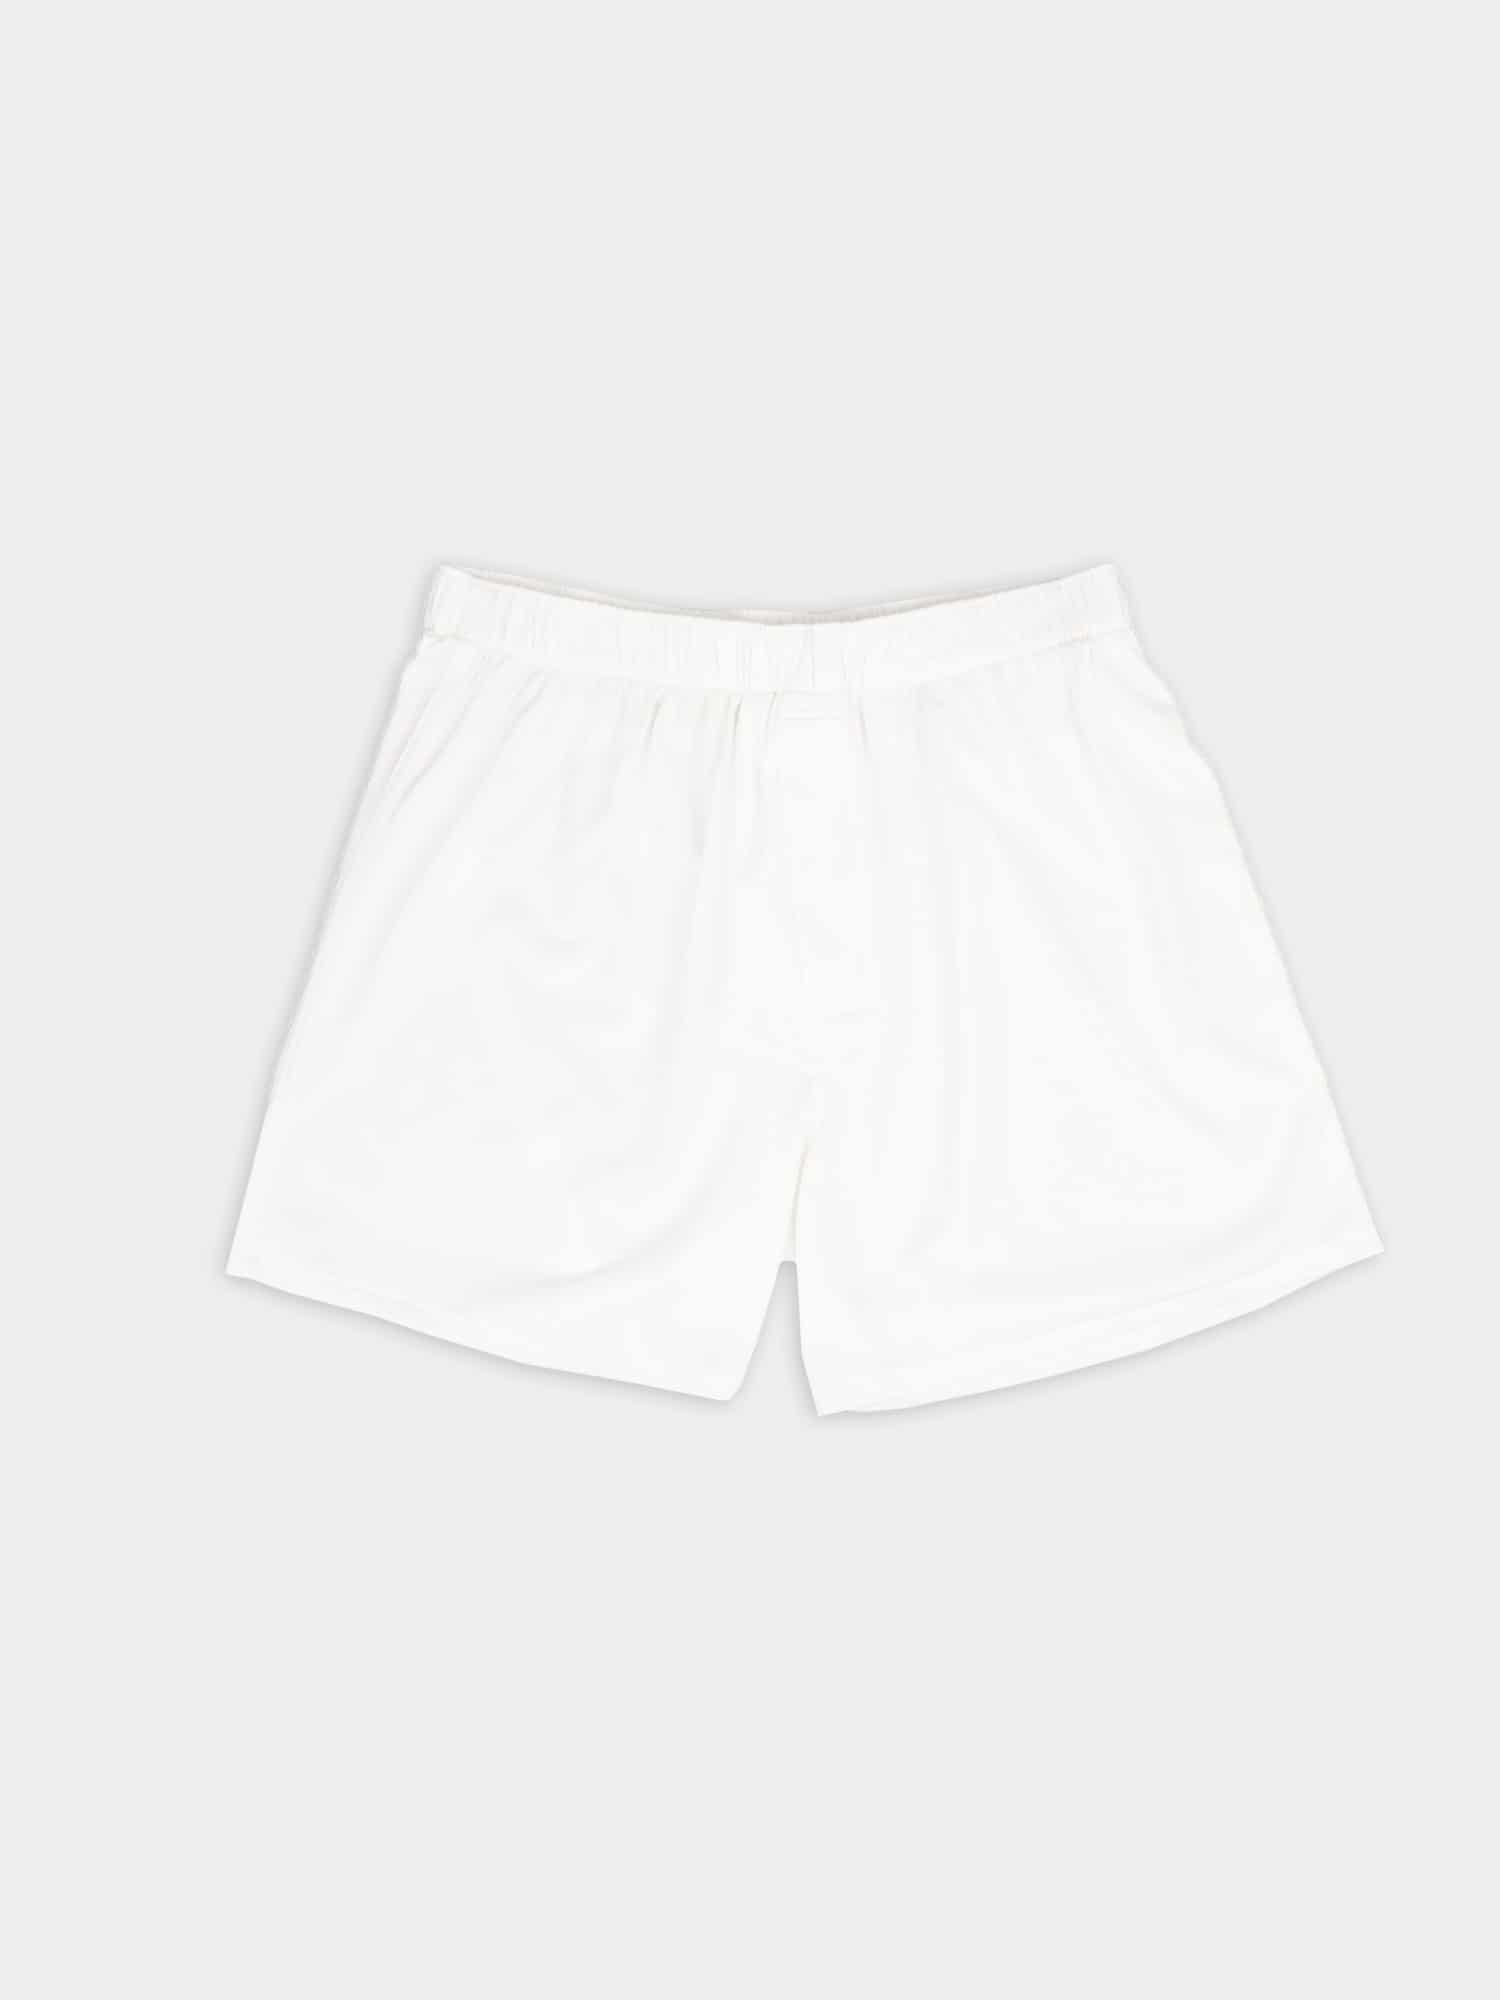 Men's Performance Boxer Shorts - White | Donald Ross Sportswear